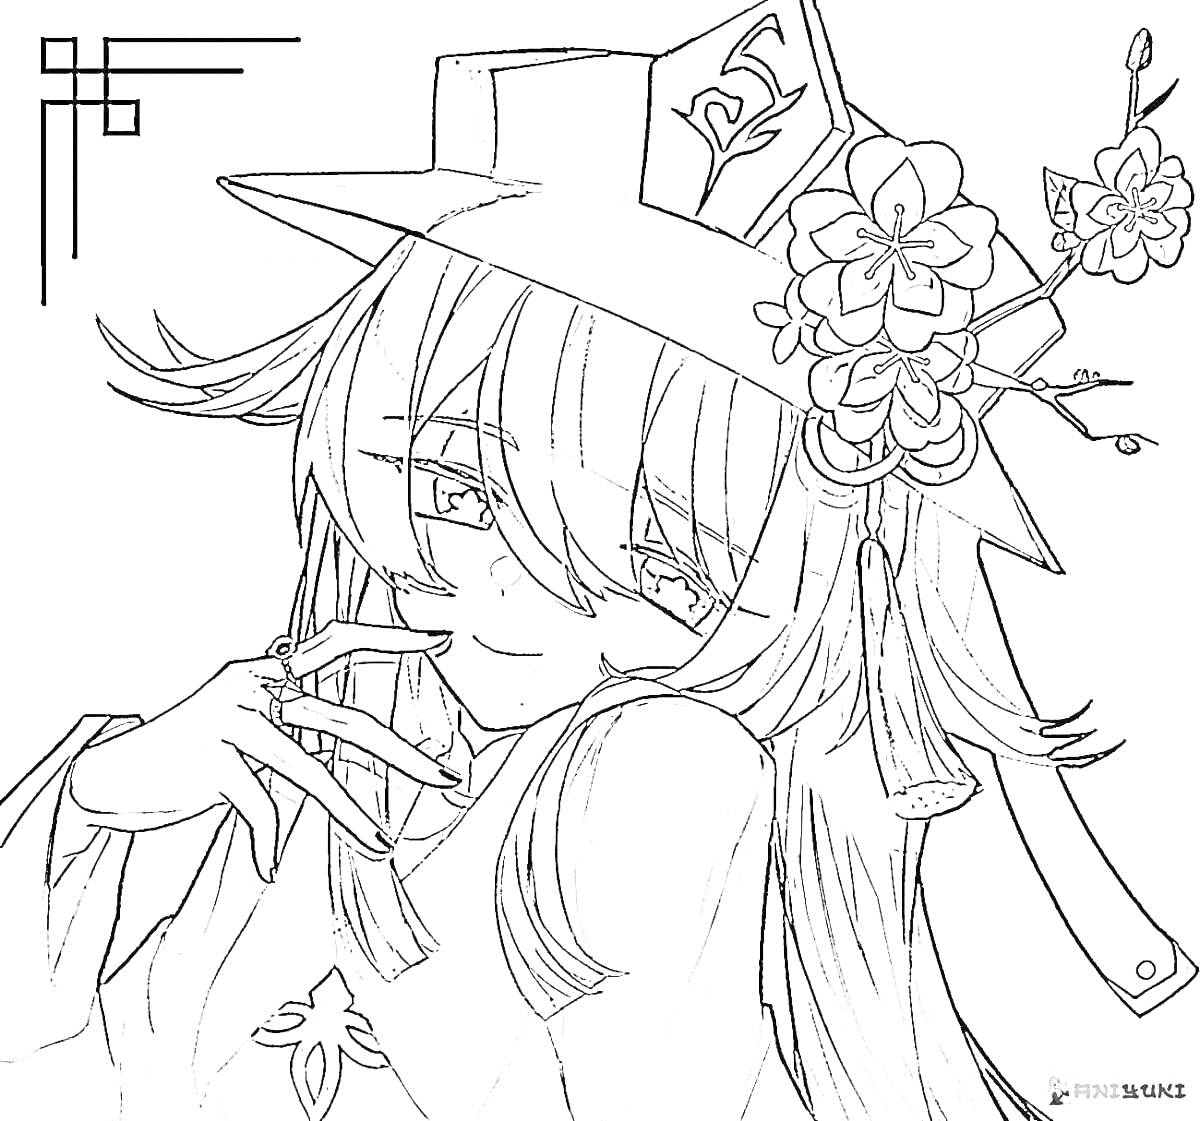 РаскраскаХу Тао с цветами на шляпе и знаками на одежде